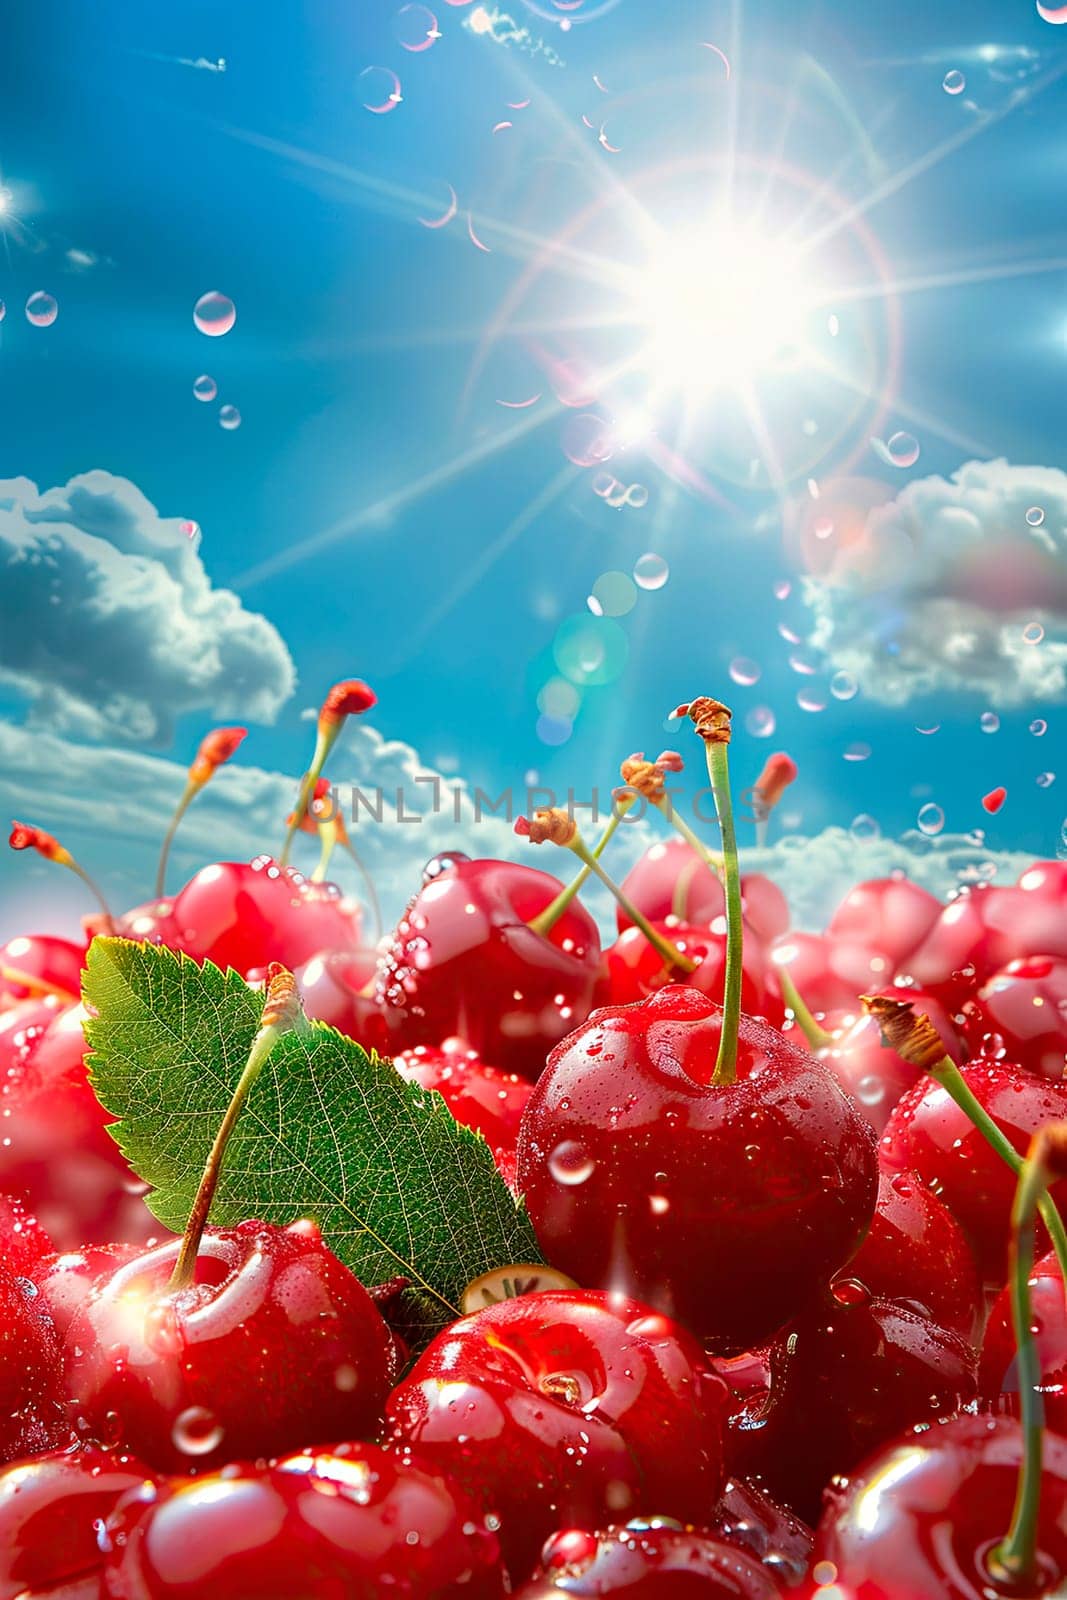 Cherry harvest in the garden. selective focus. by yanadjana